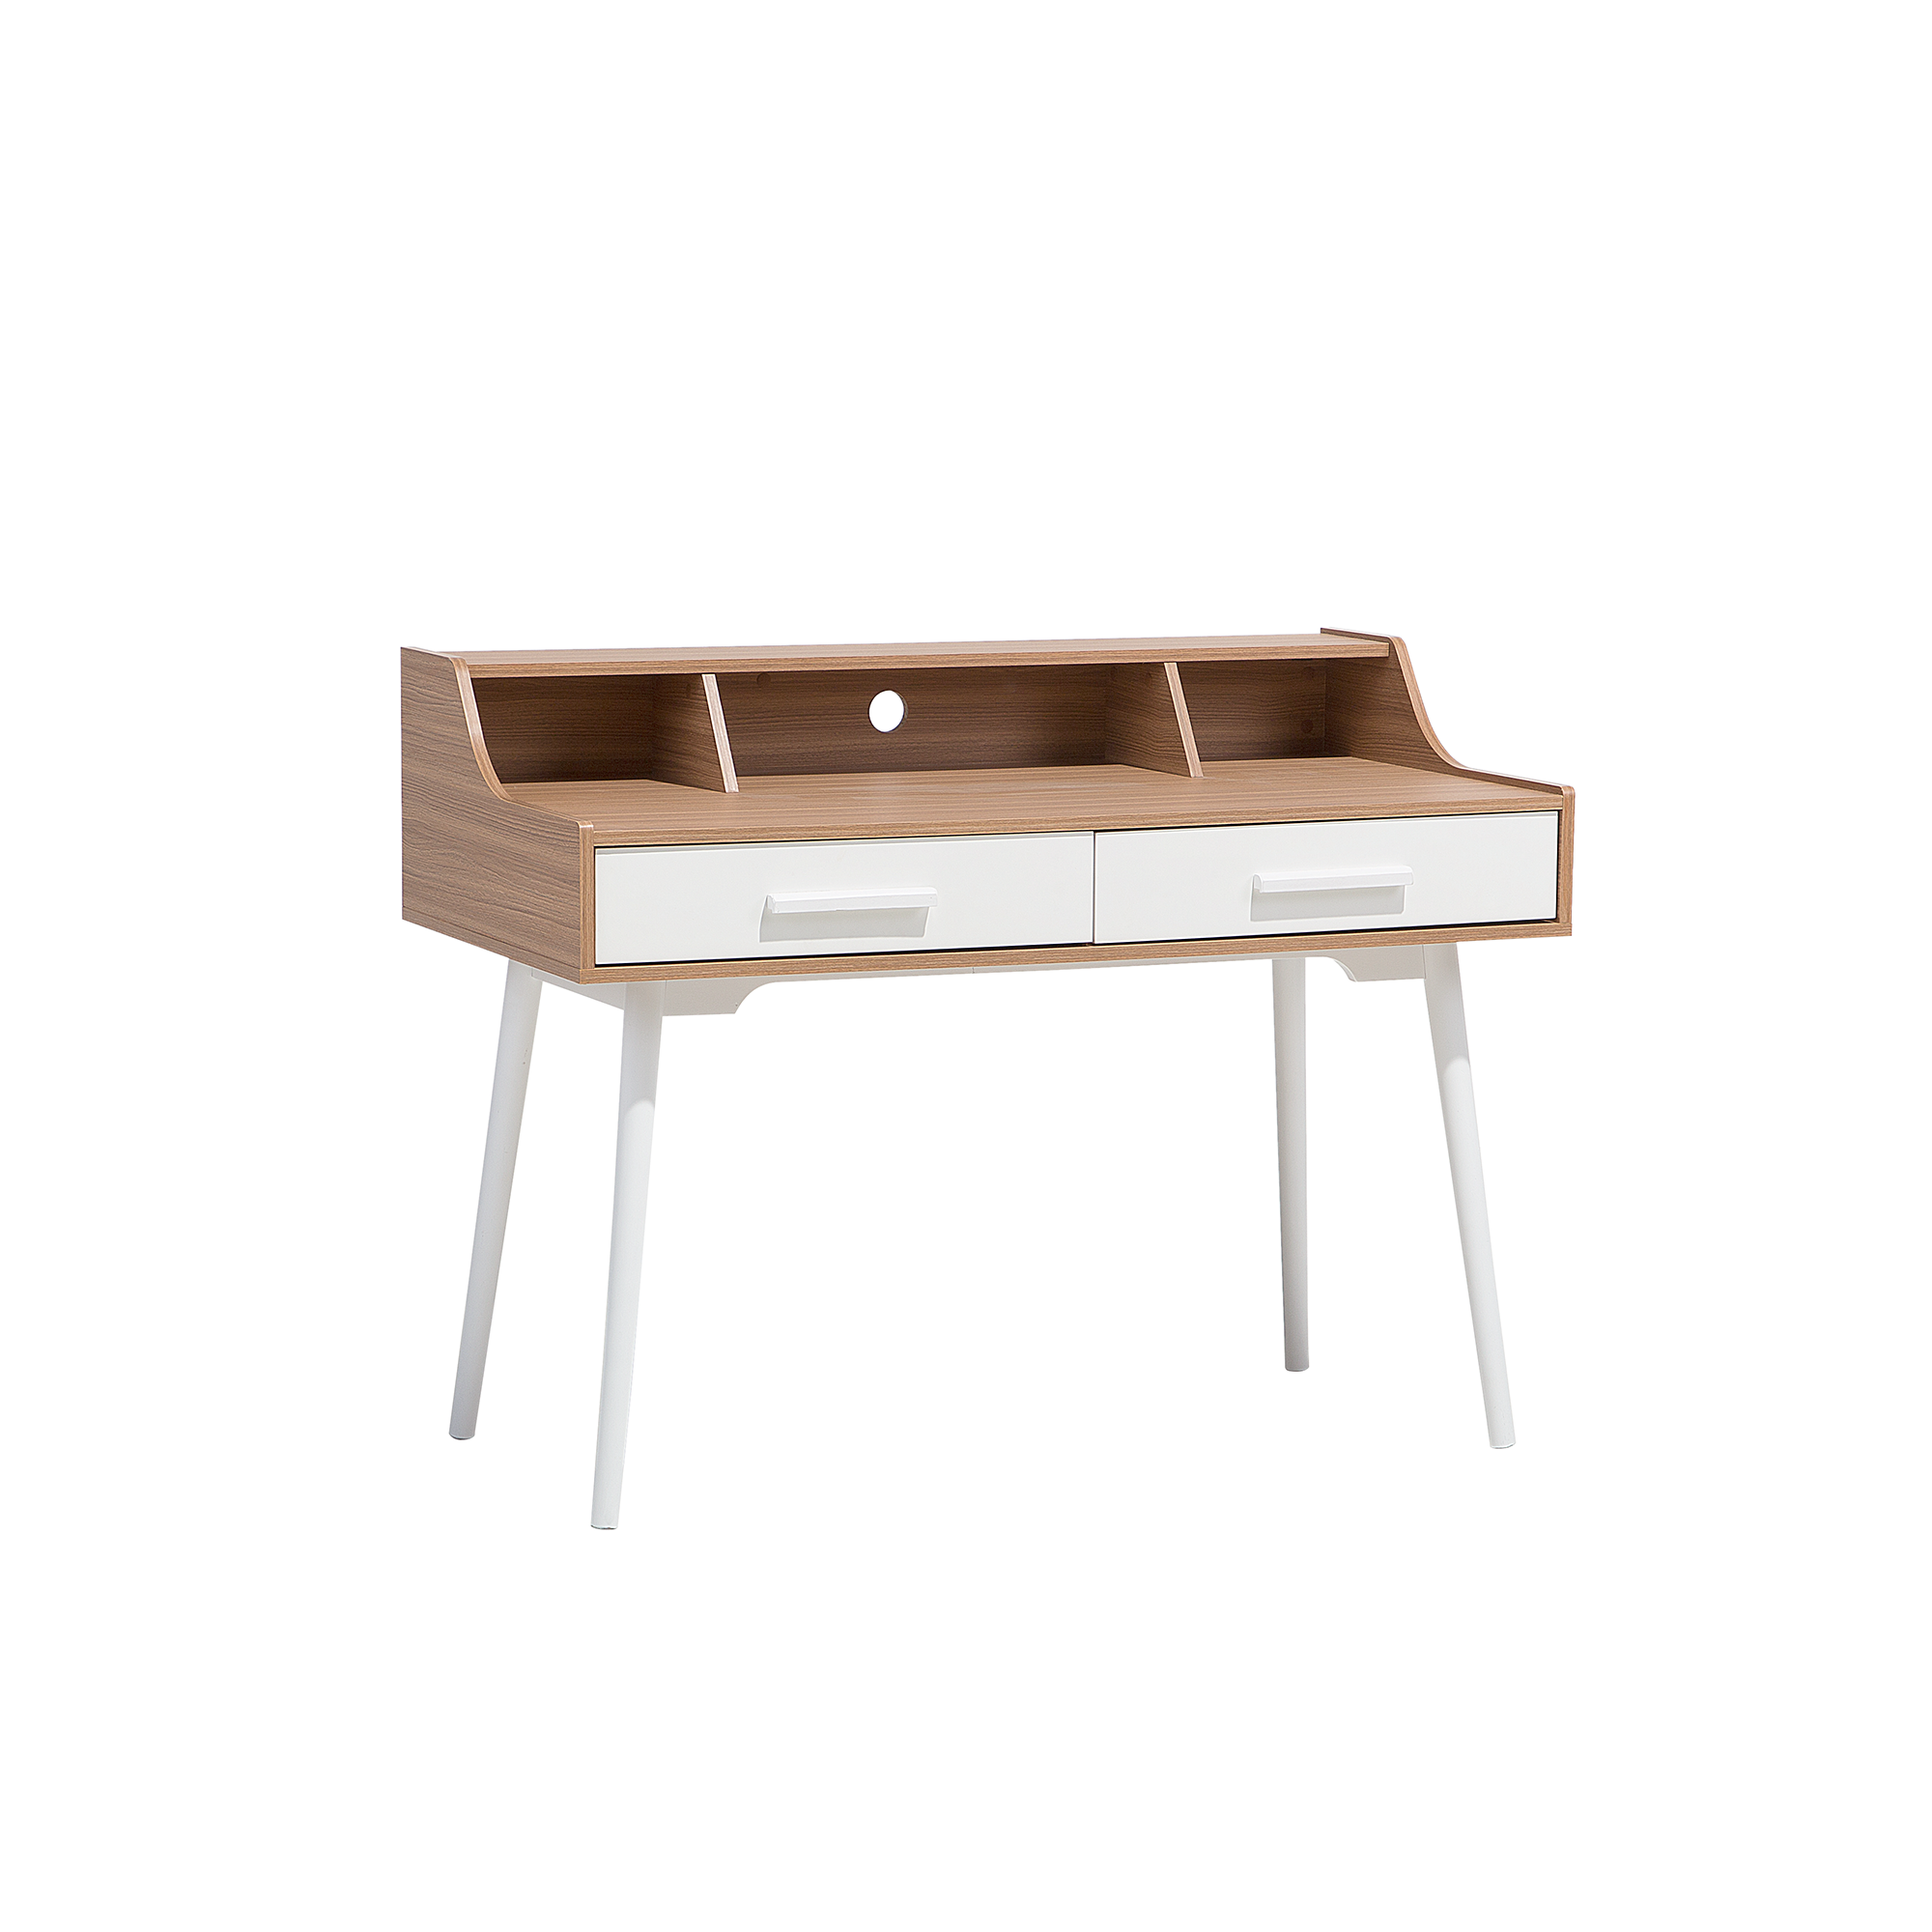 Beliani Home Office Desk Light Wood with White 120 x 58 cm Modern 2 Drawers Shelf Retro Style